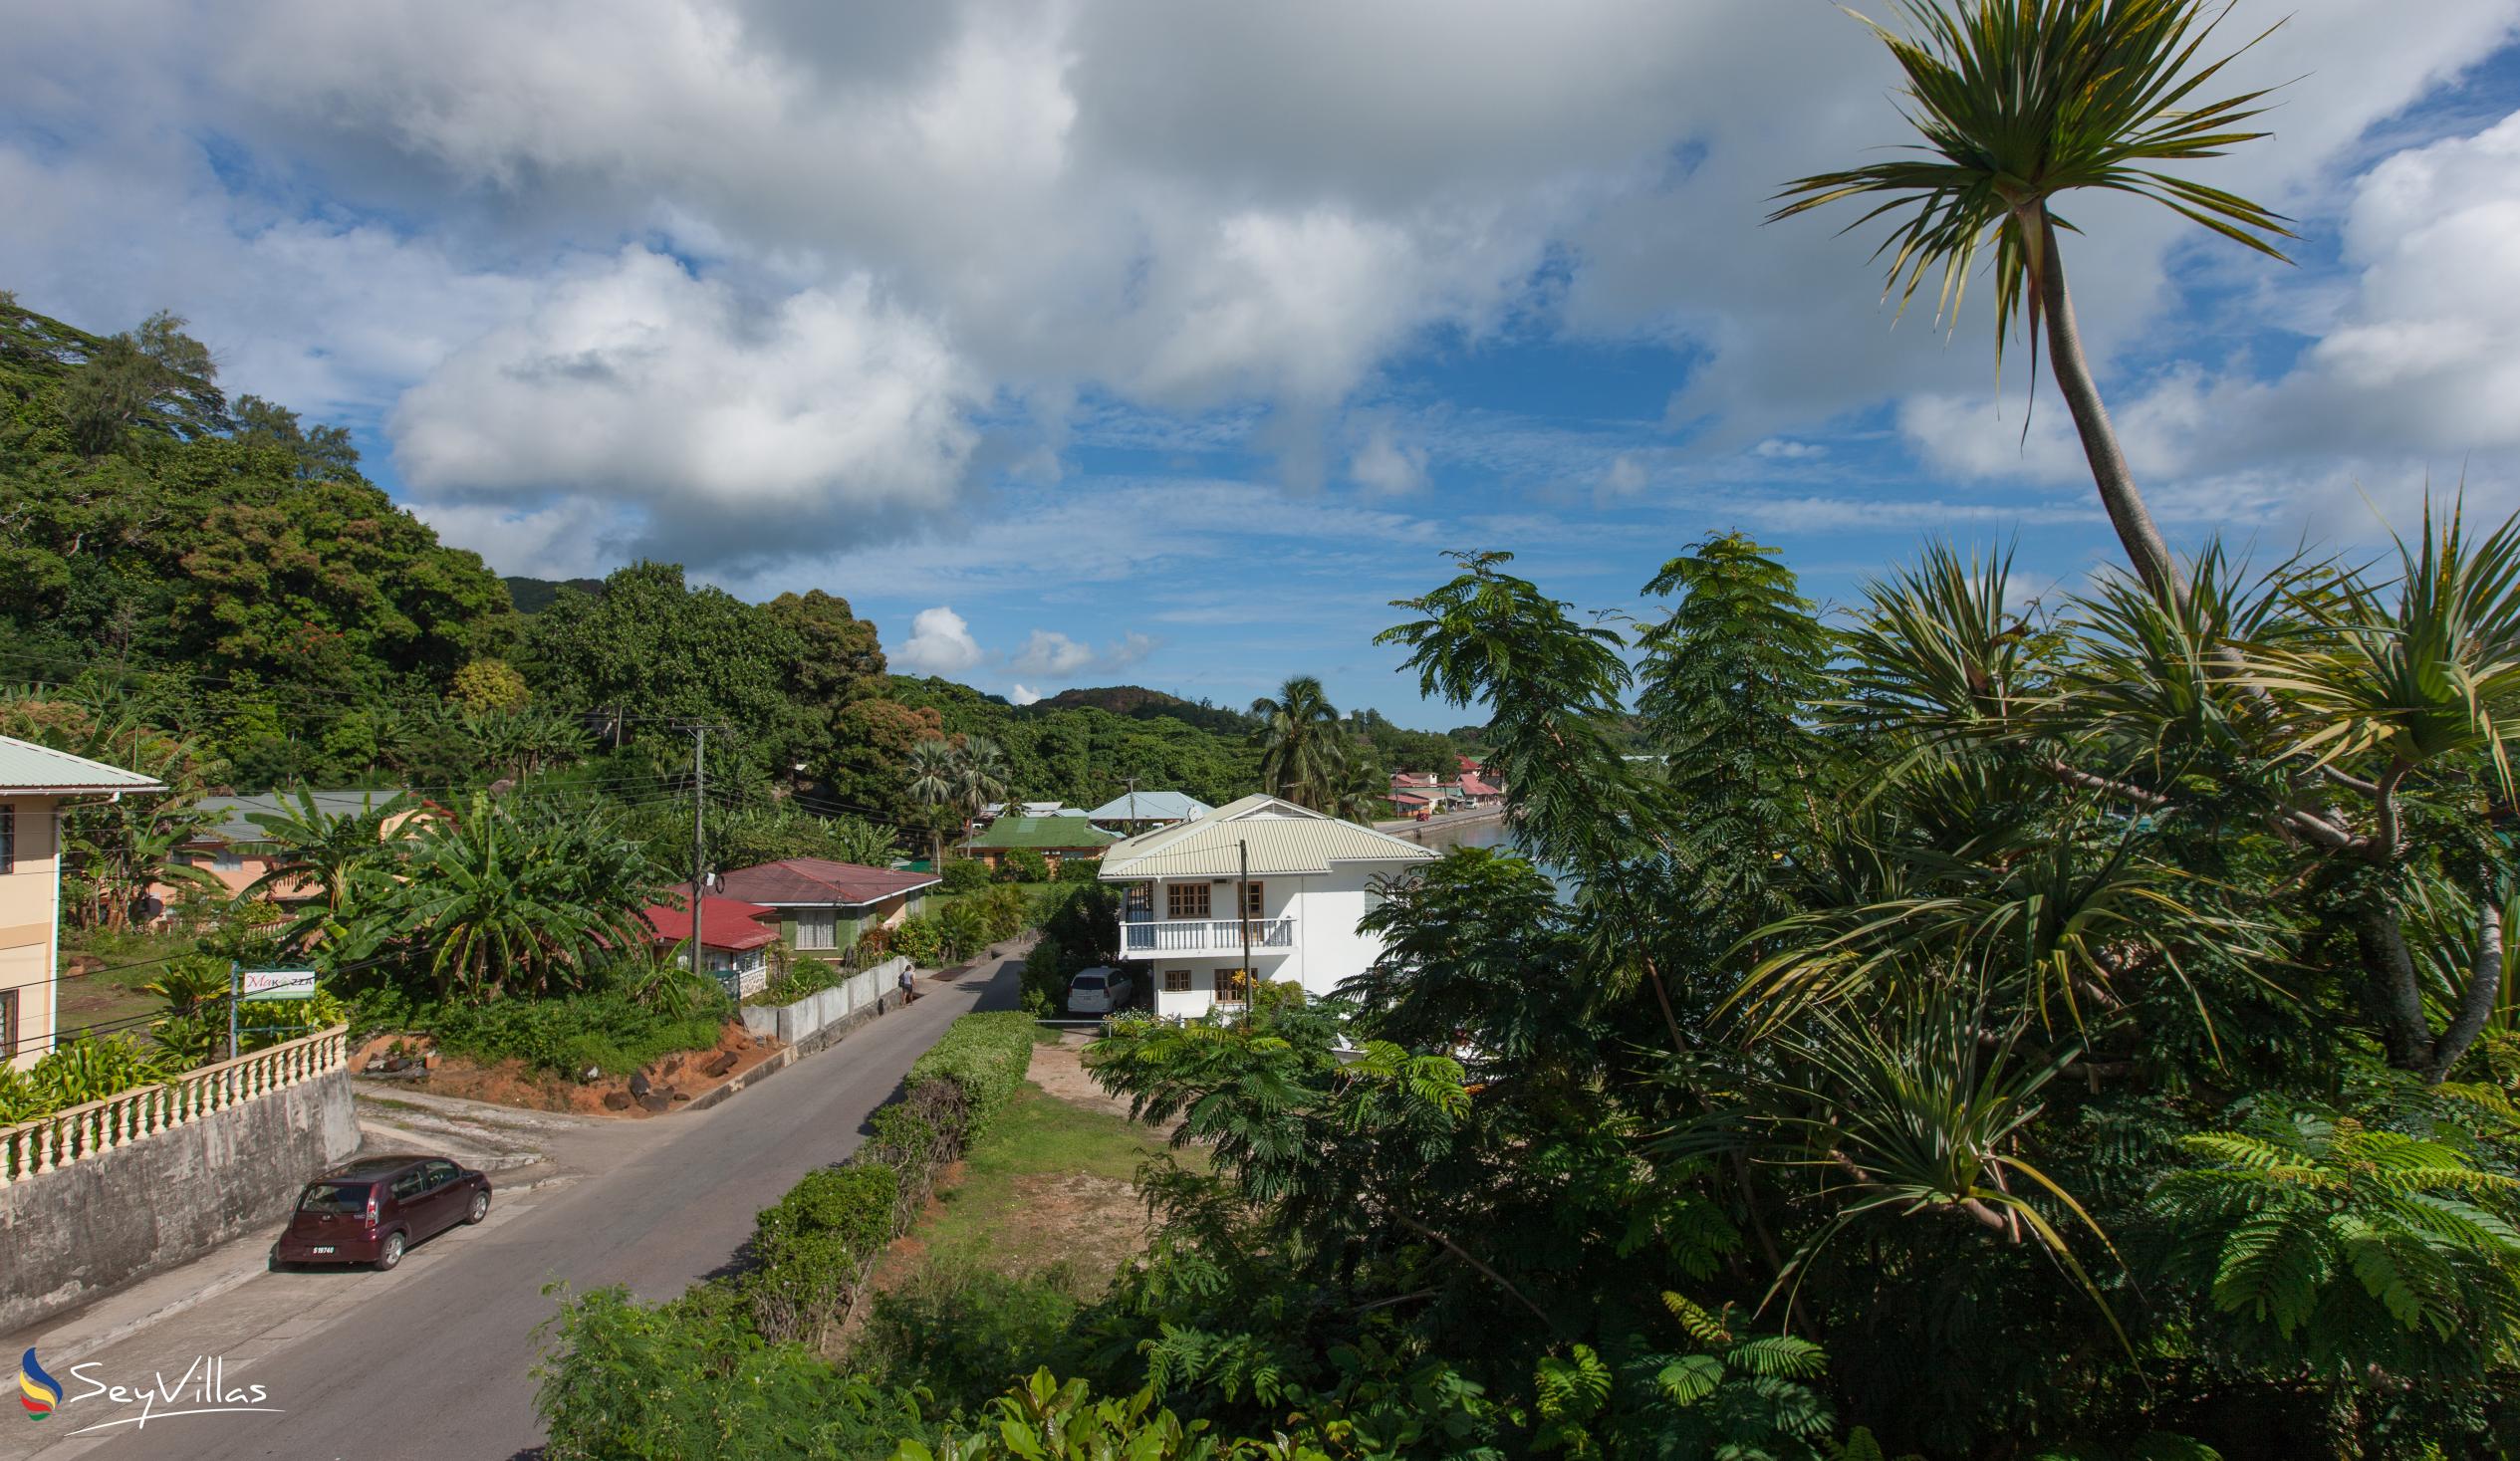 Foto 19: The Old School Self Catering - Location - Praslin (Seychelles)